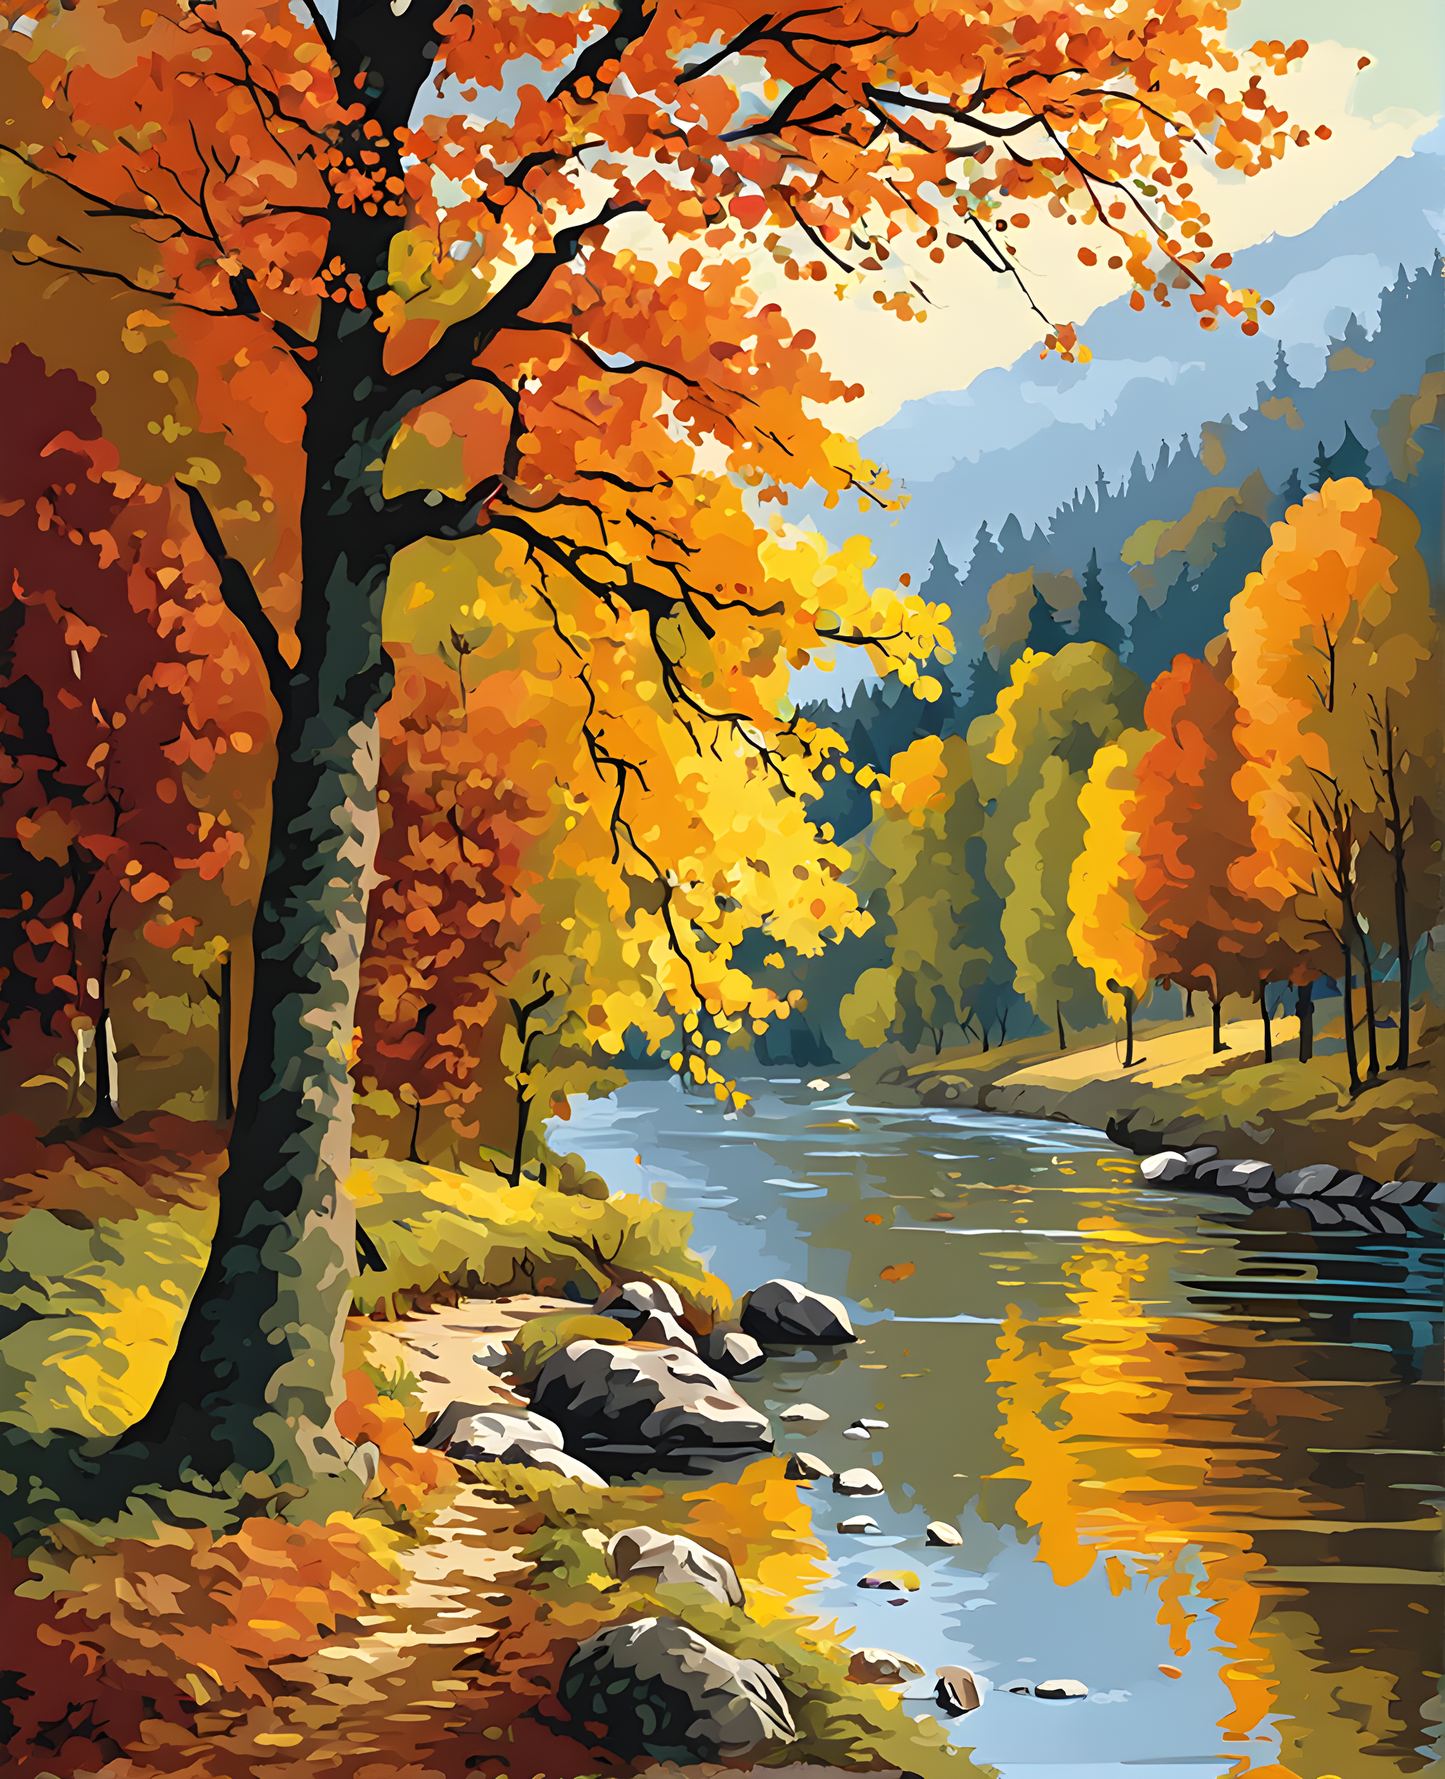 Riverside Autumn Trees (2) - Van-Go Paint-By-Number Kit